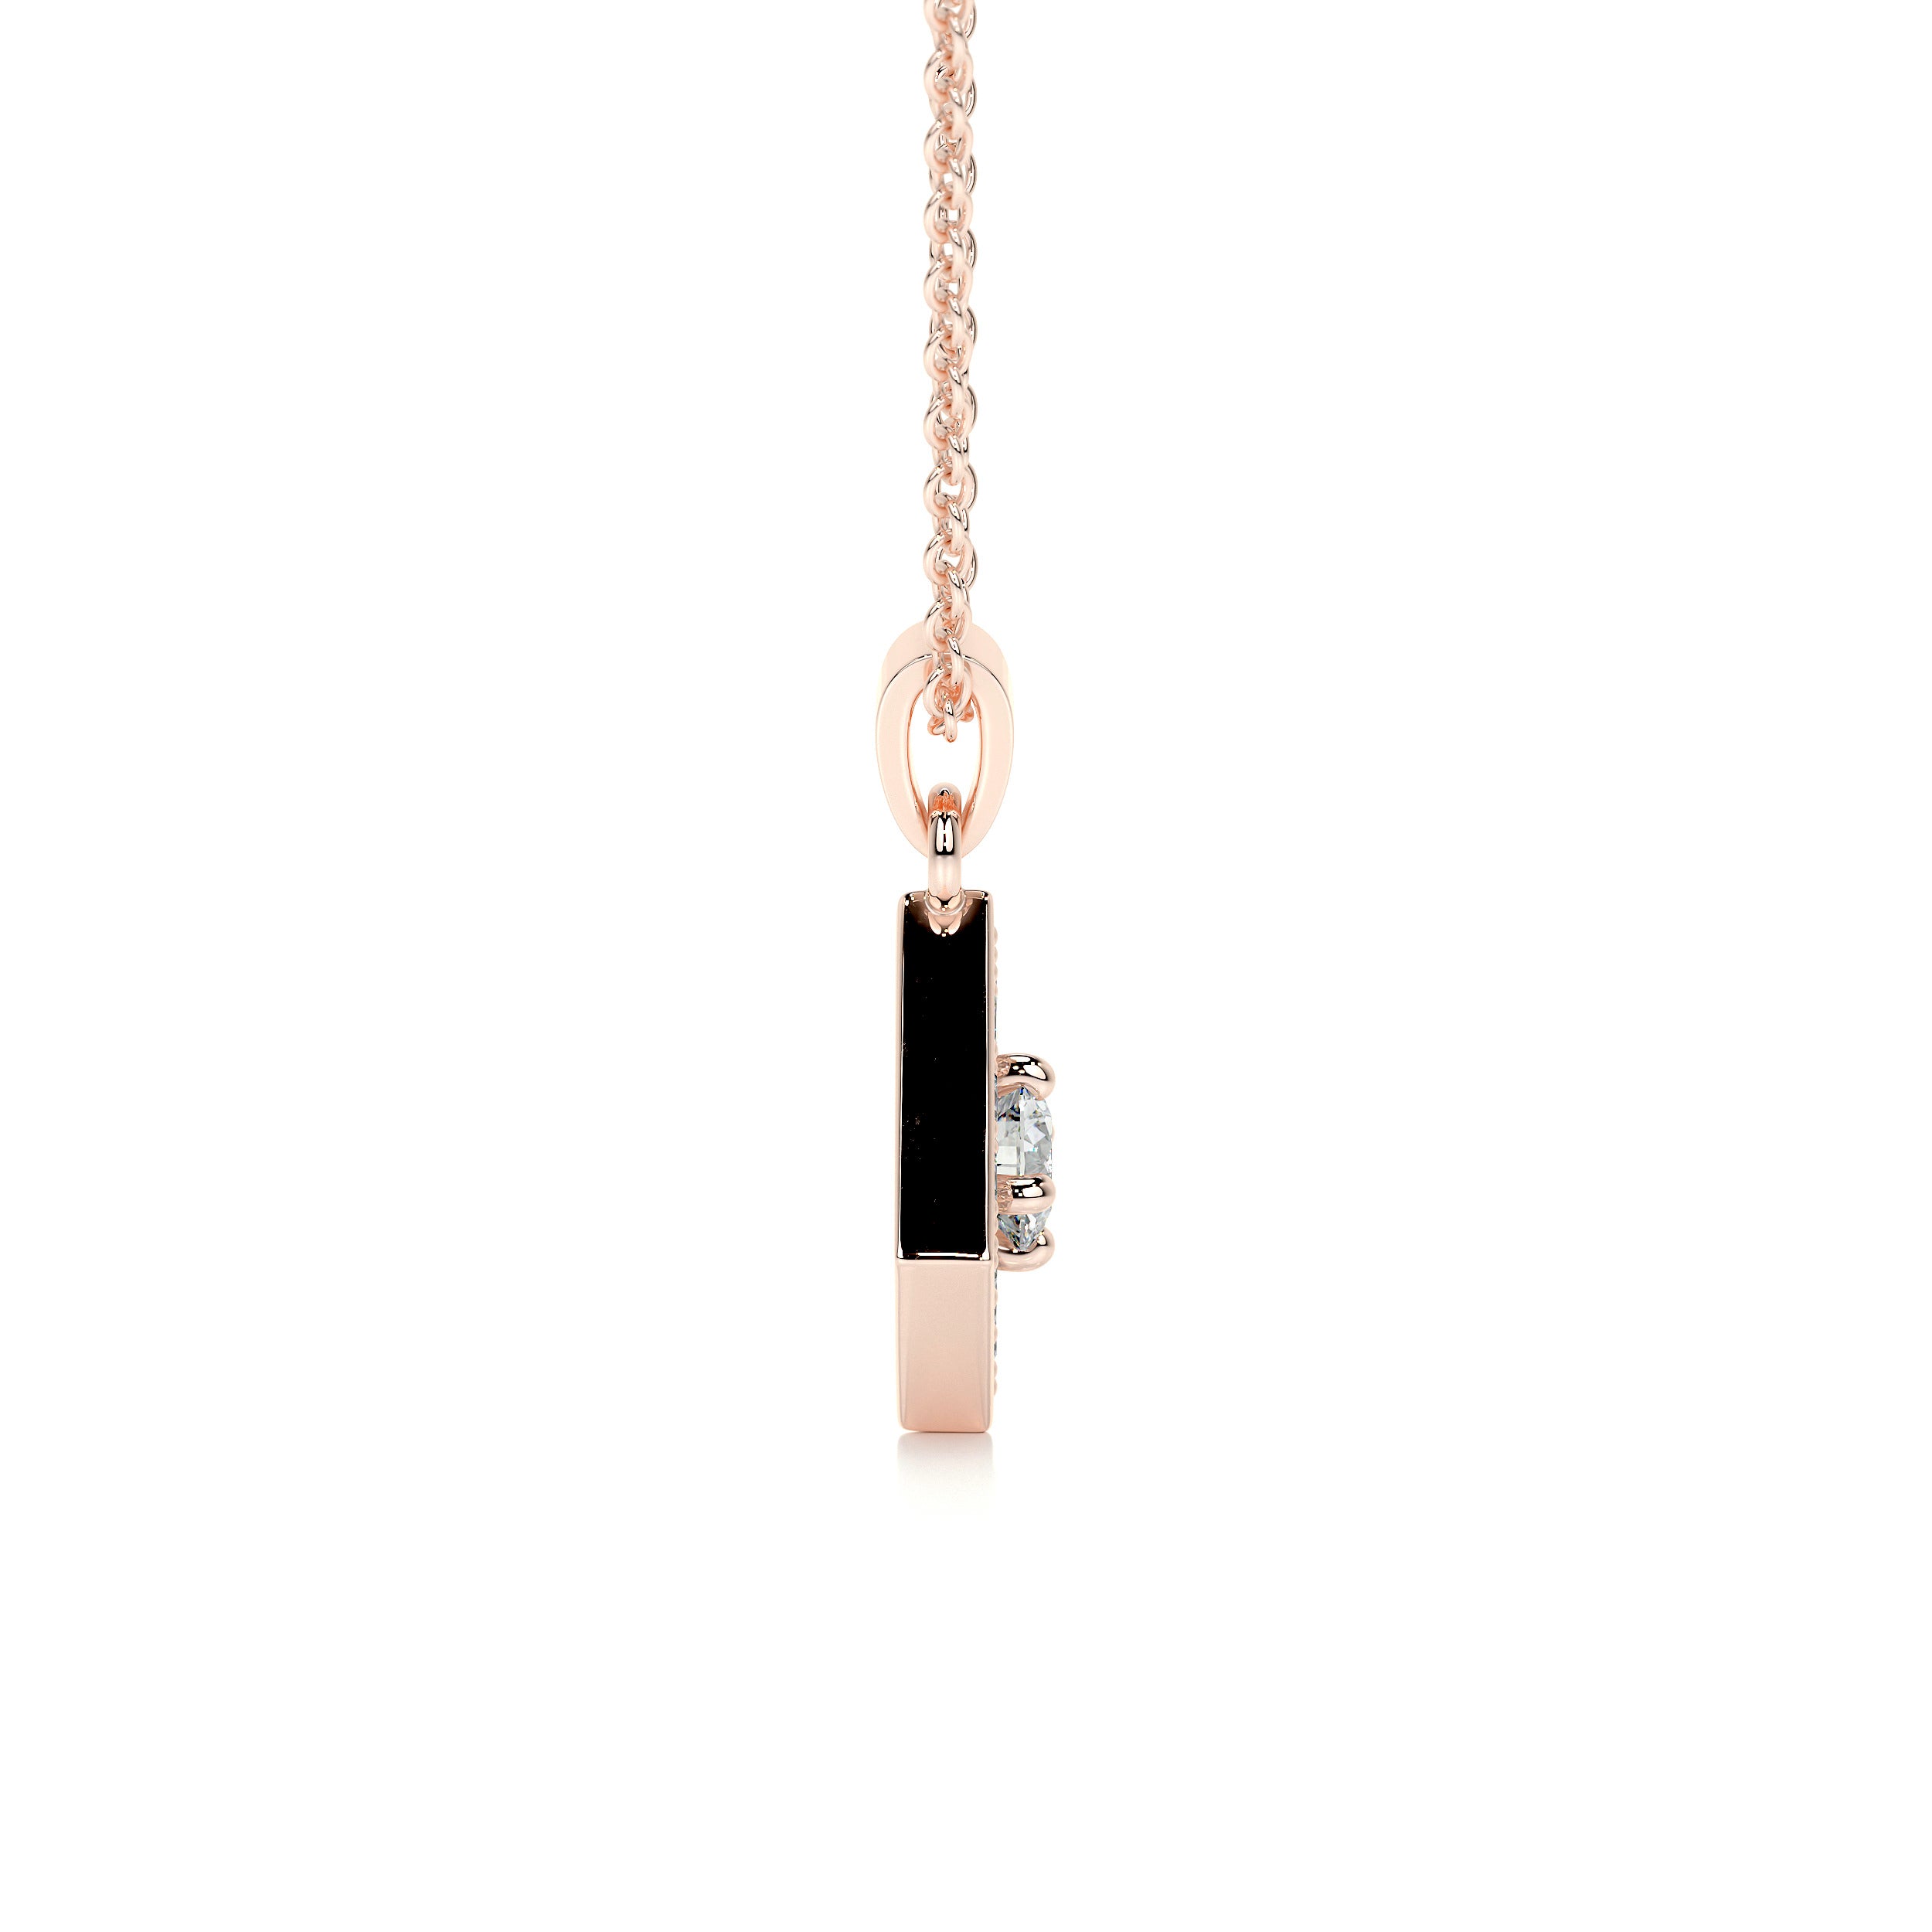 Maxine Diamond Pendant   (0.4 Carat) -14K Rose Gold